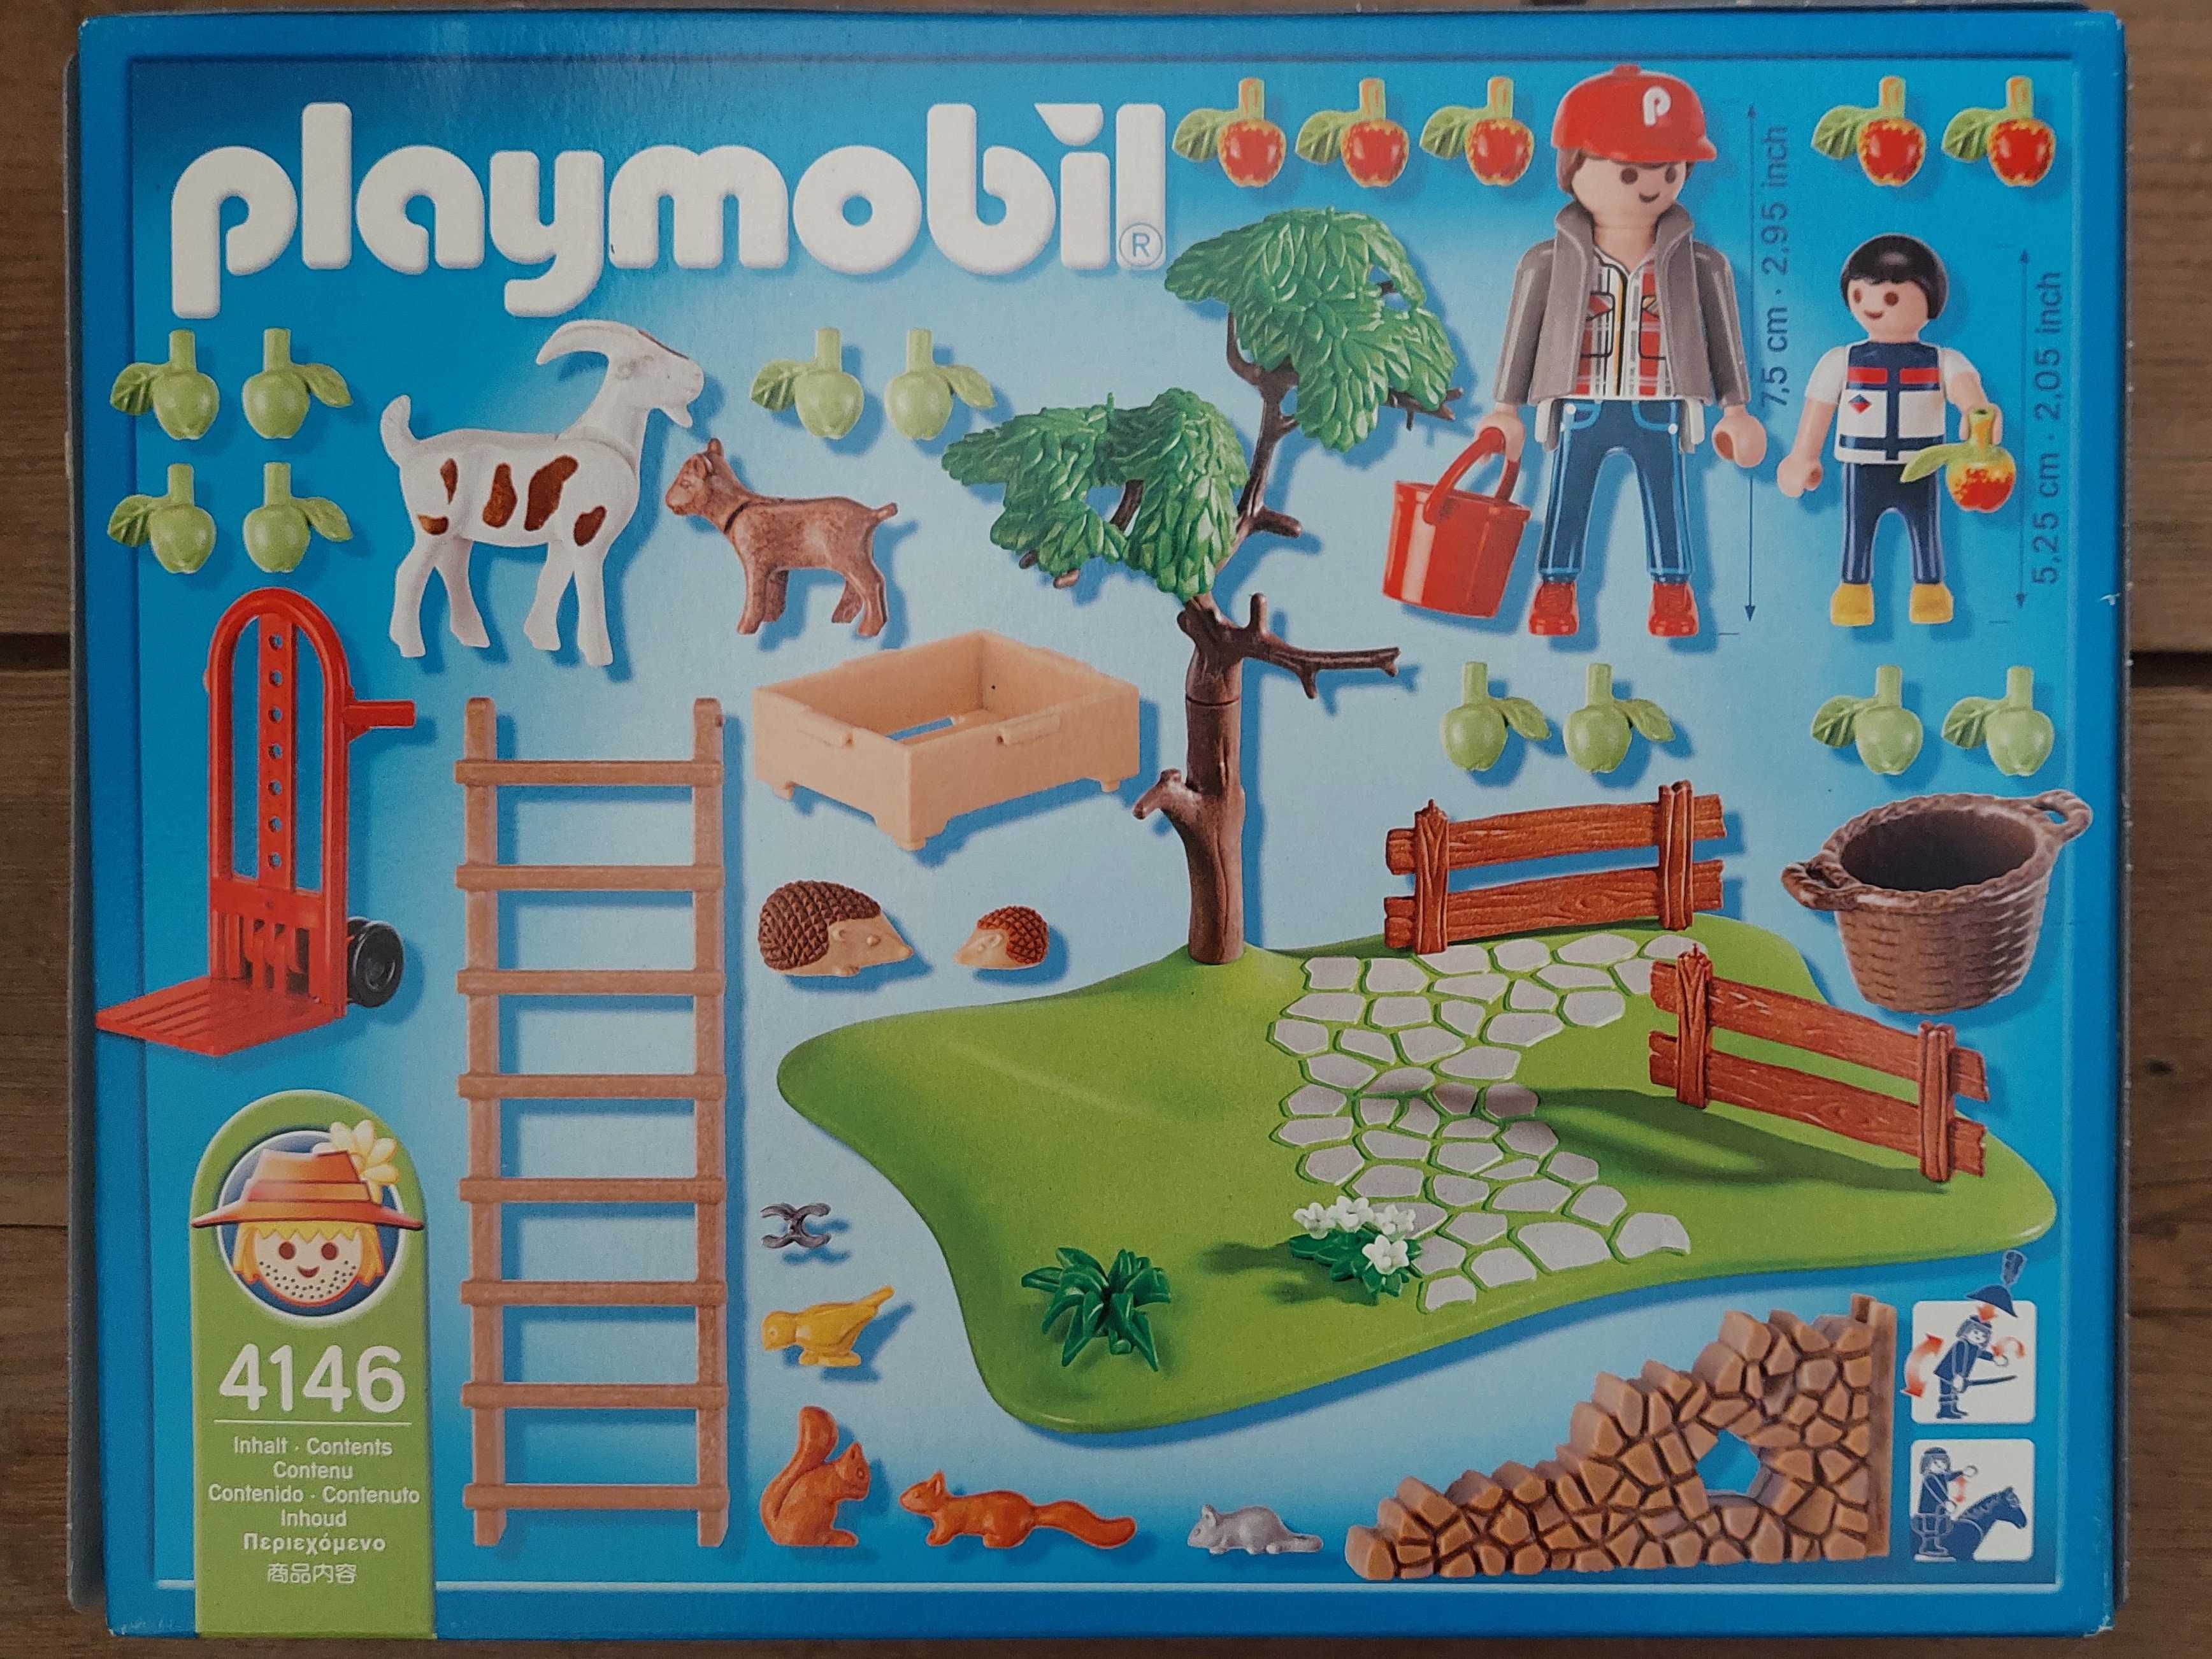 Playmobil  - Colheita na quinta - 4146 - dos 4 aos 10 anos